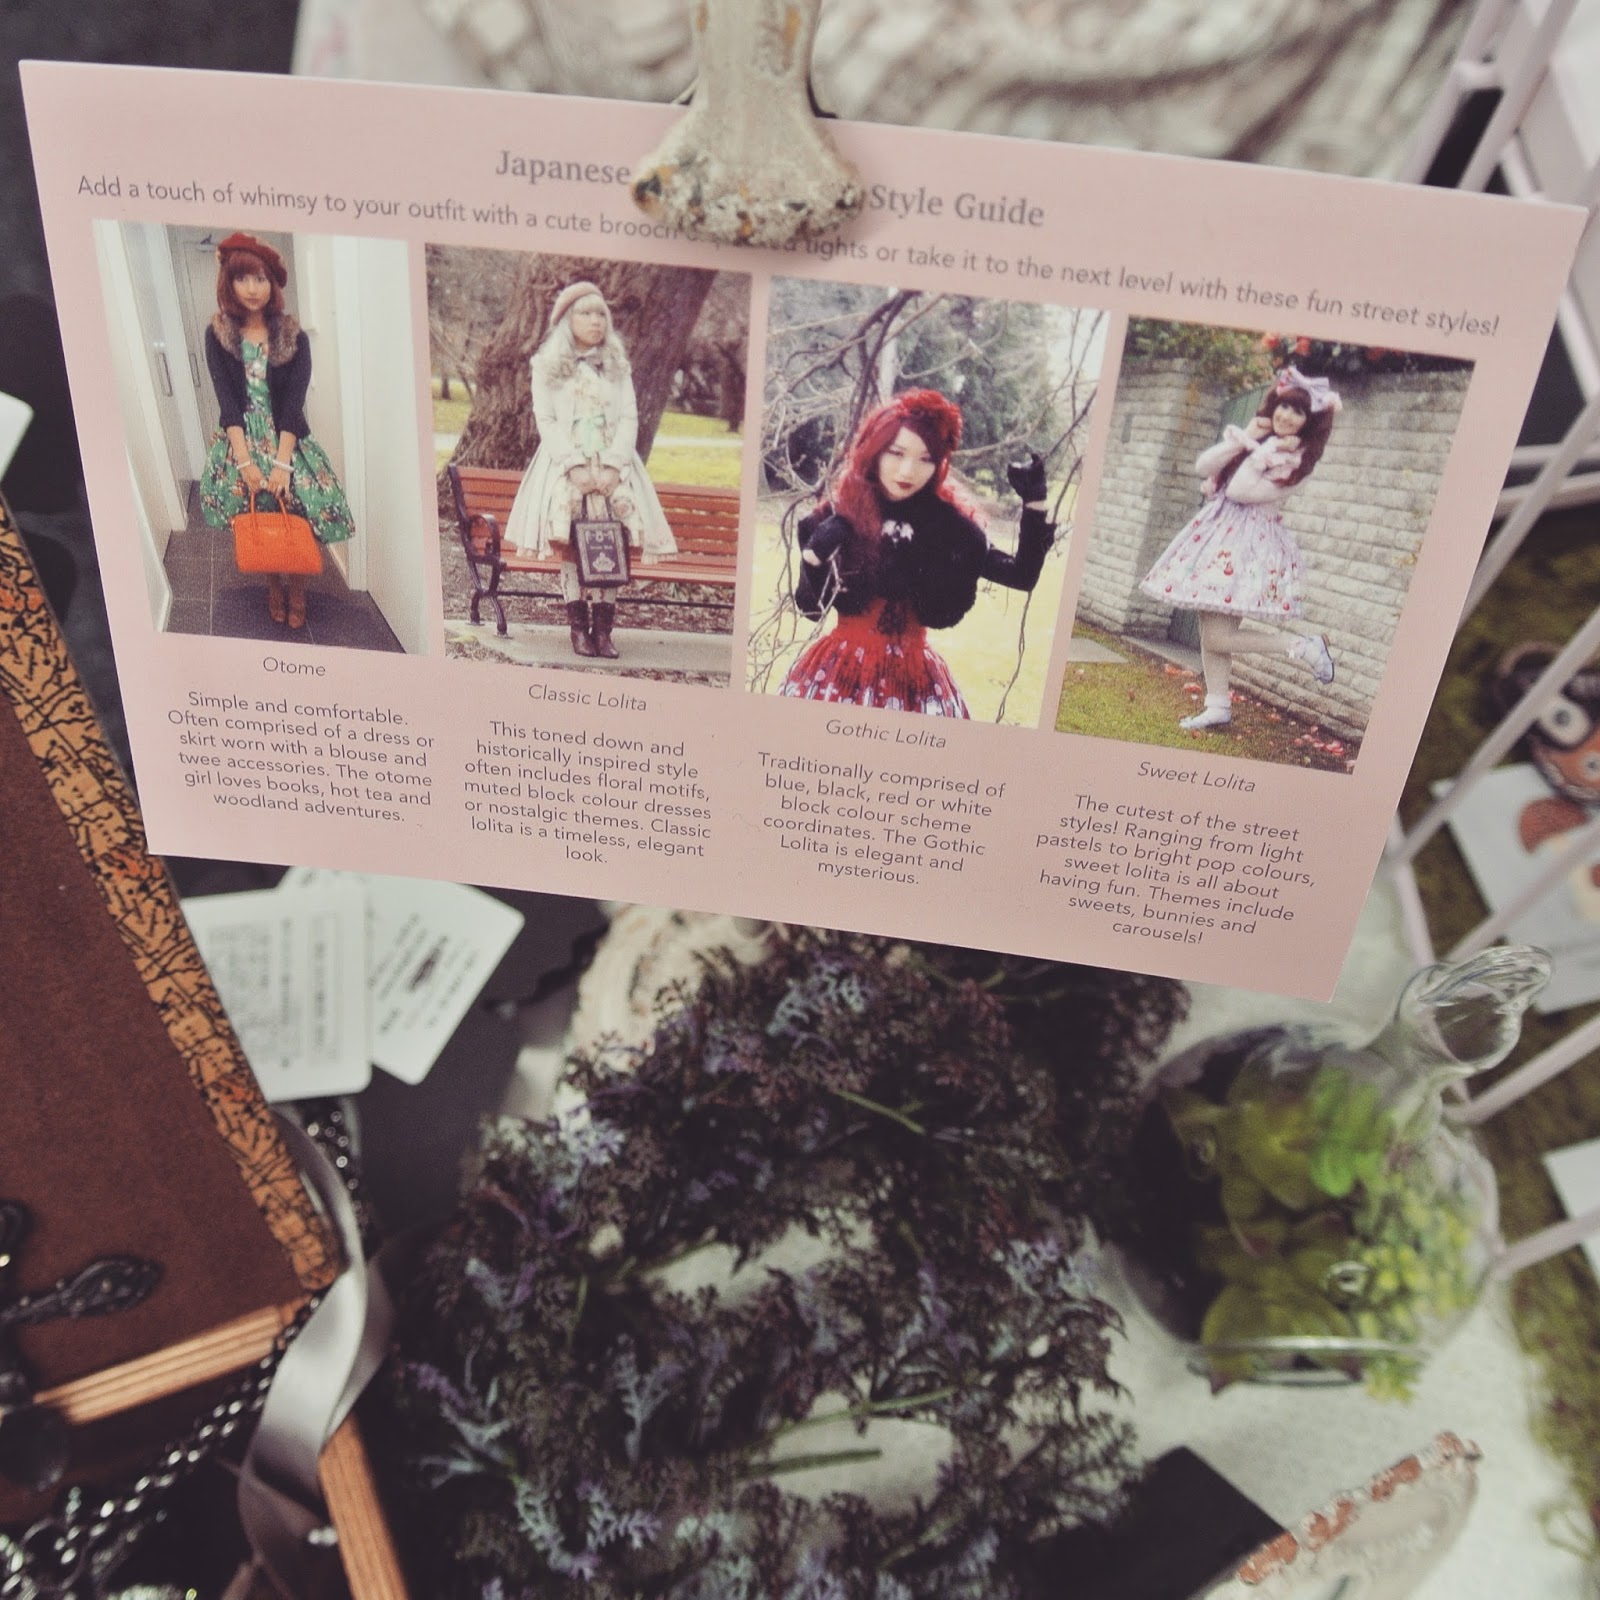 chiffon rose shop kawaii fashion cute woodland ilustration melbourne market supanova 2015